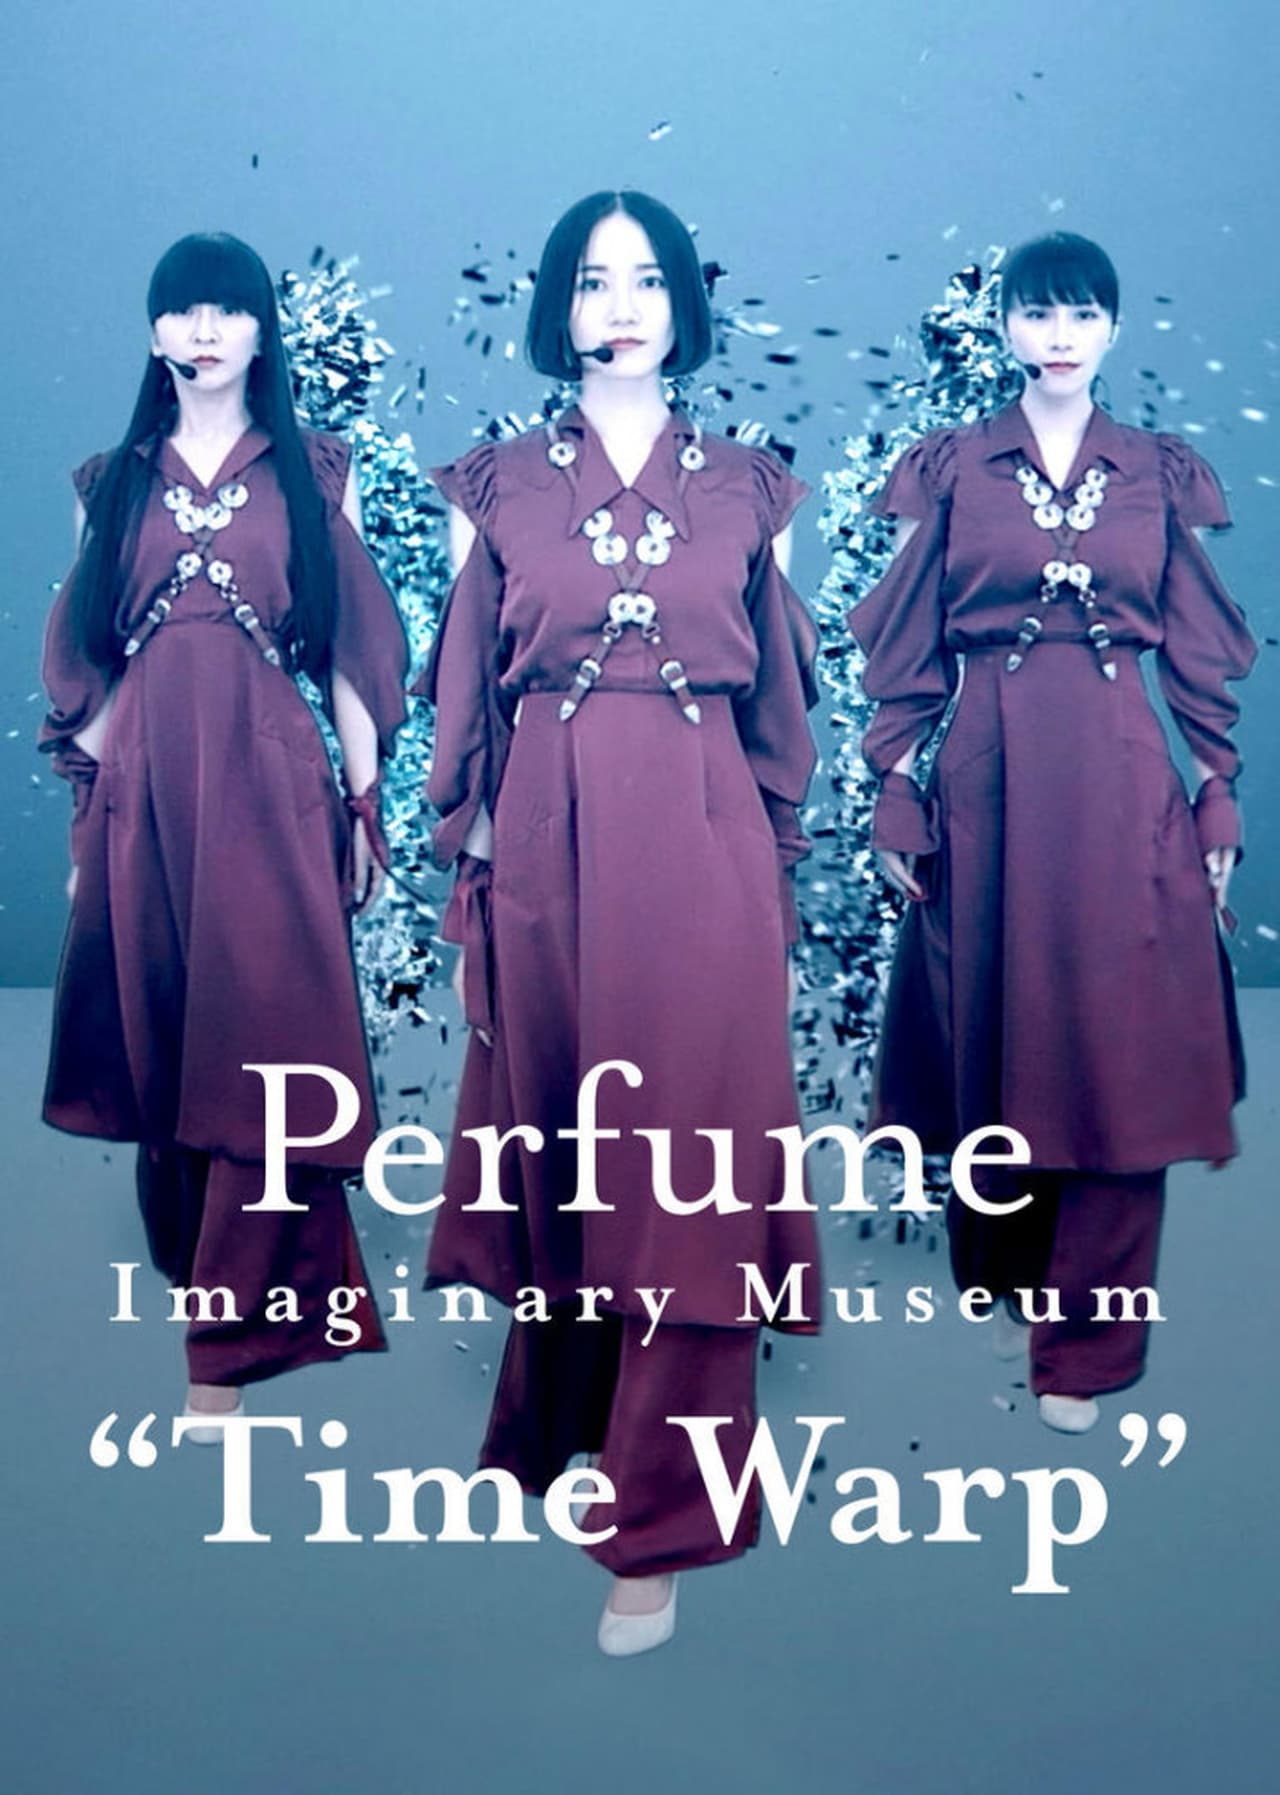 Perfume Imaginary Museum “Time Warp” | awwrated | 你的 Netflix 避雷好幫手!